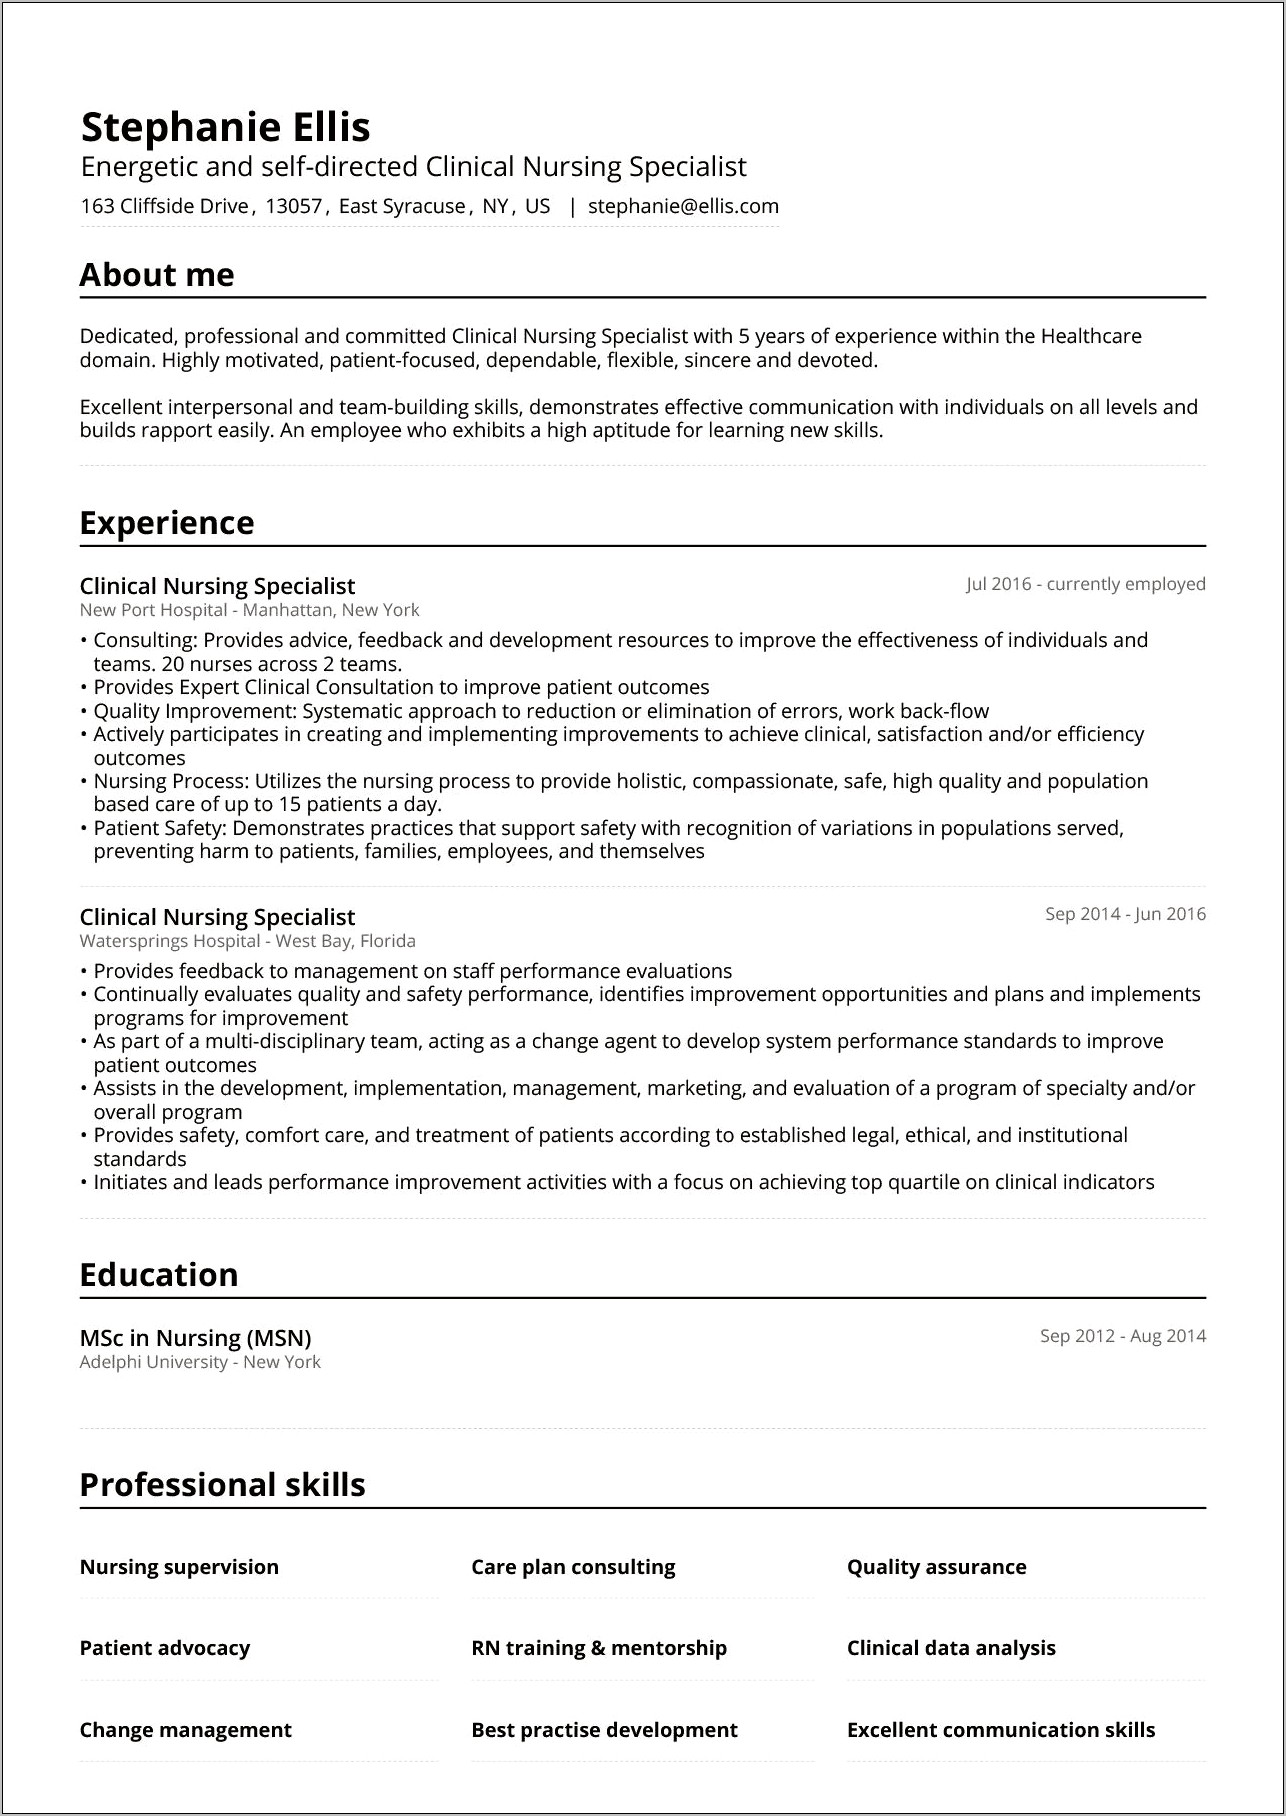 Resume Samples Using Professional Summary